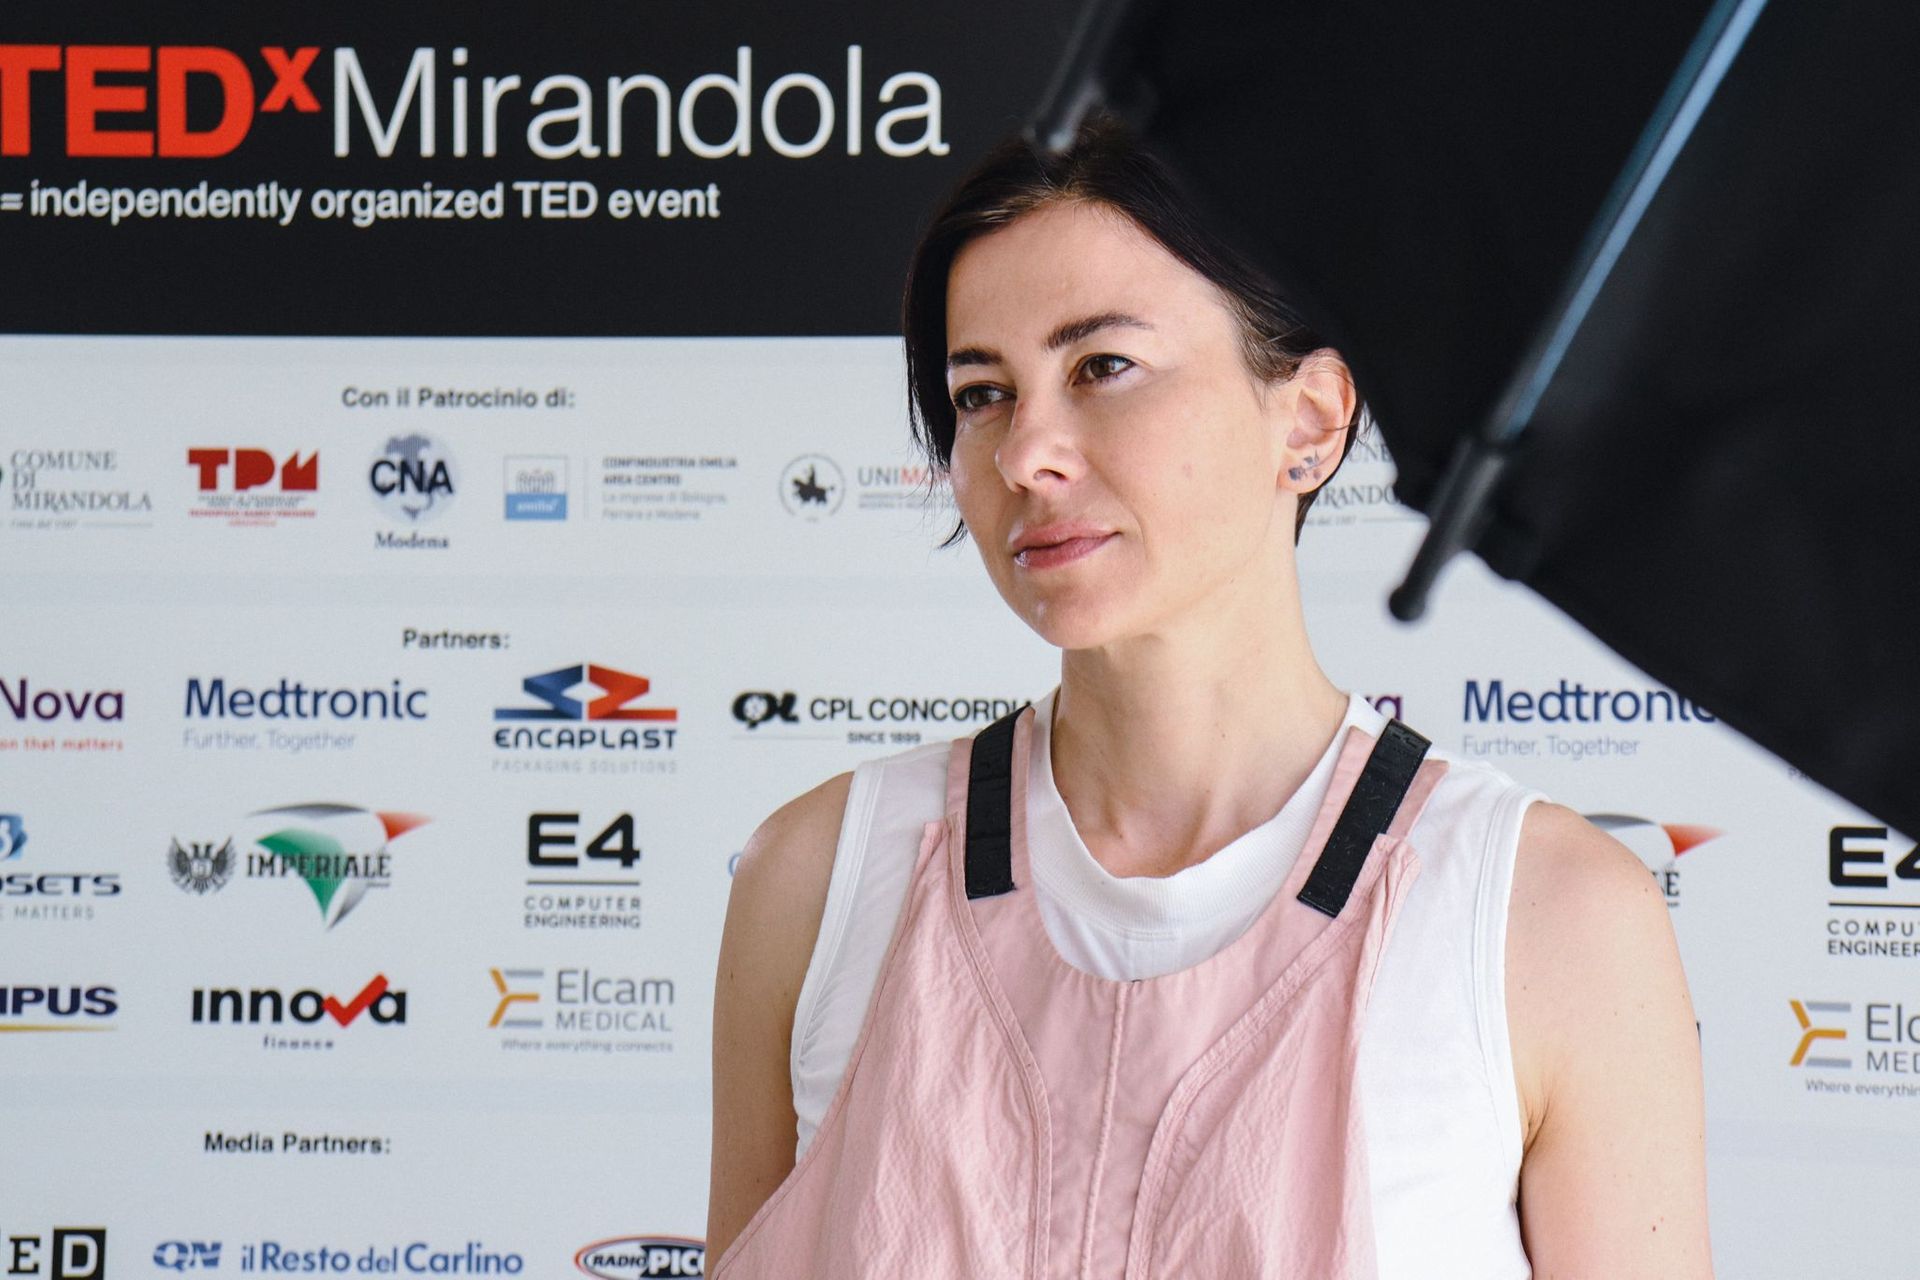 Maverx 基金会的创始人 Francesca Veronesi 是 1962 年生物医学领域先驱 Mario 的女儿：她是第一届 TEDx Mirandola 的演讲者